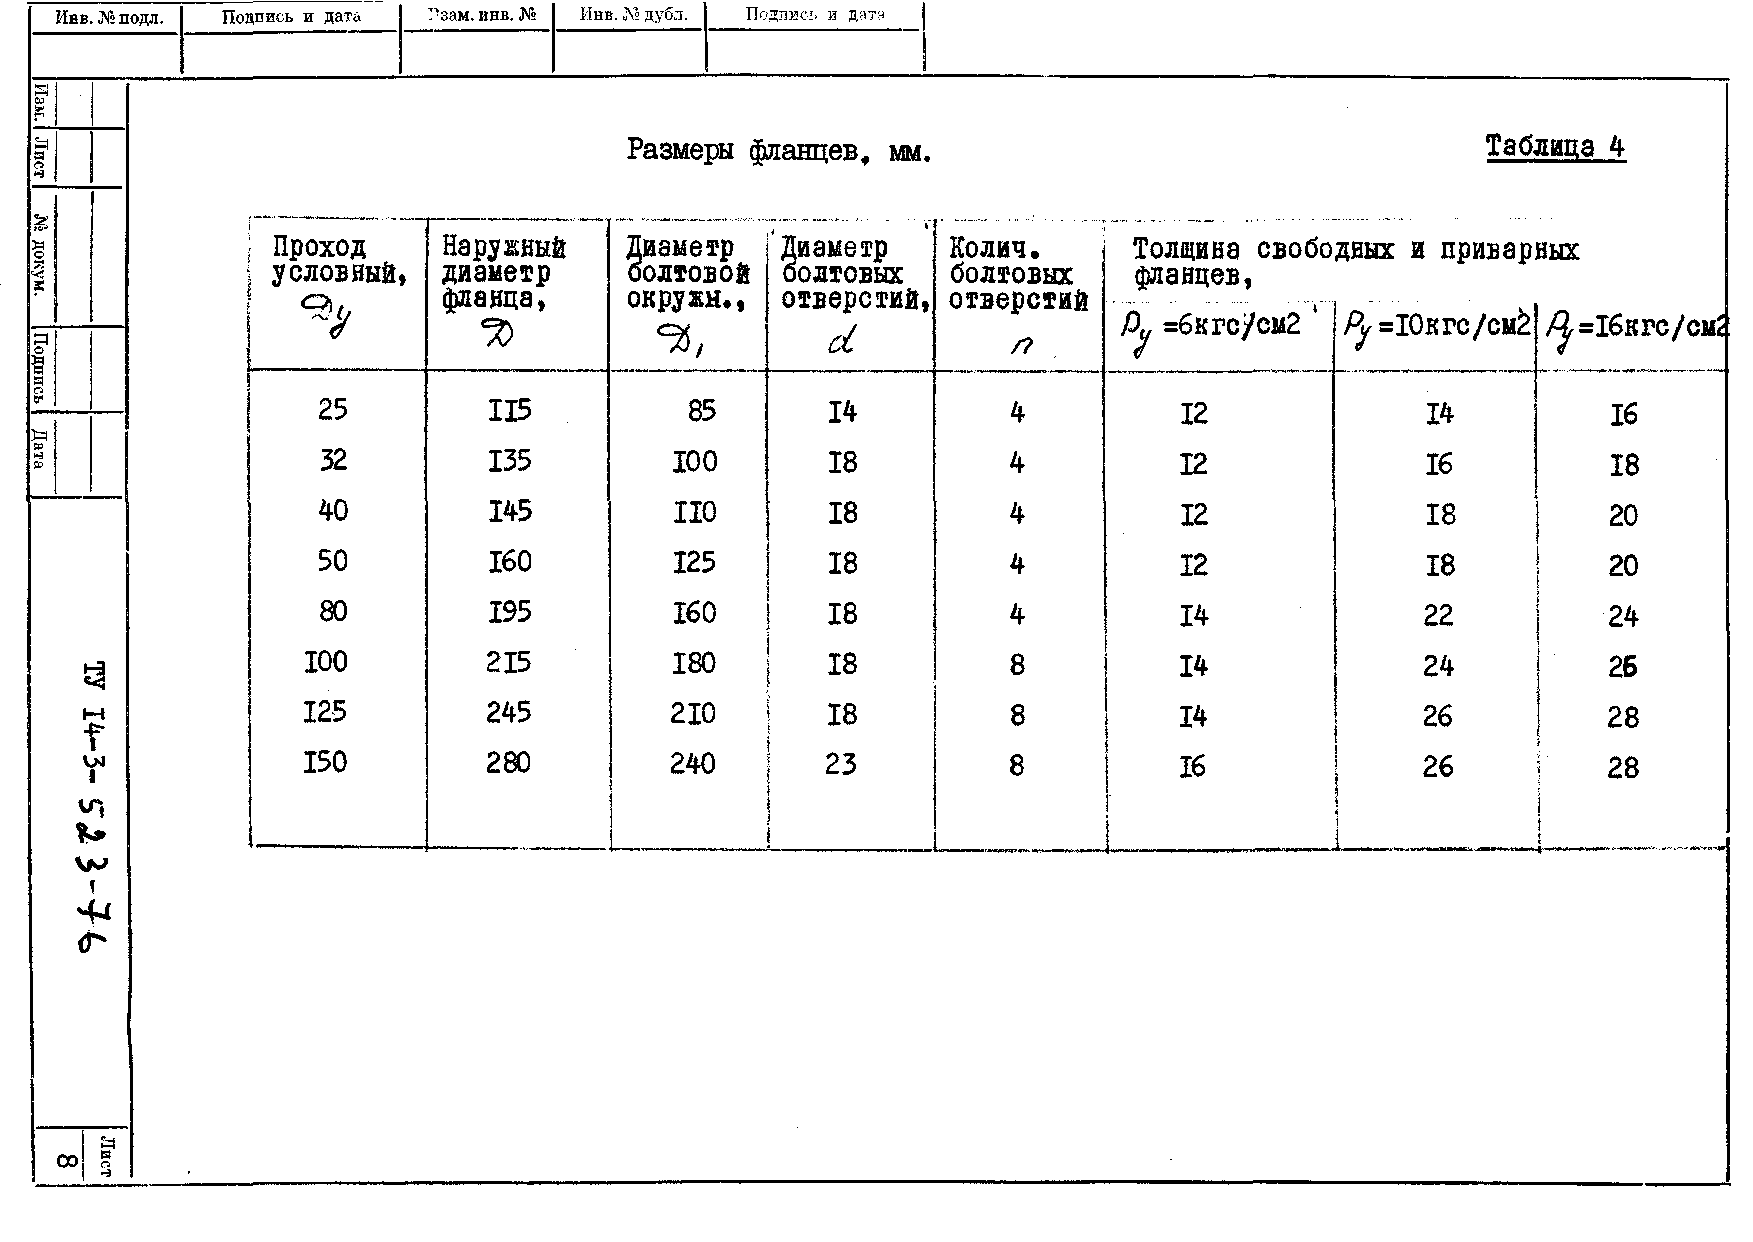 ТУ 14-3-523-76